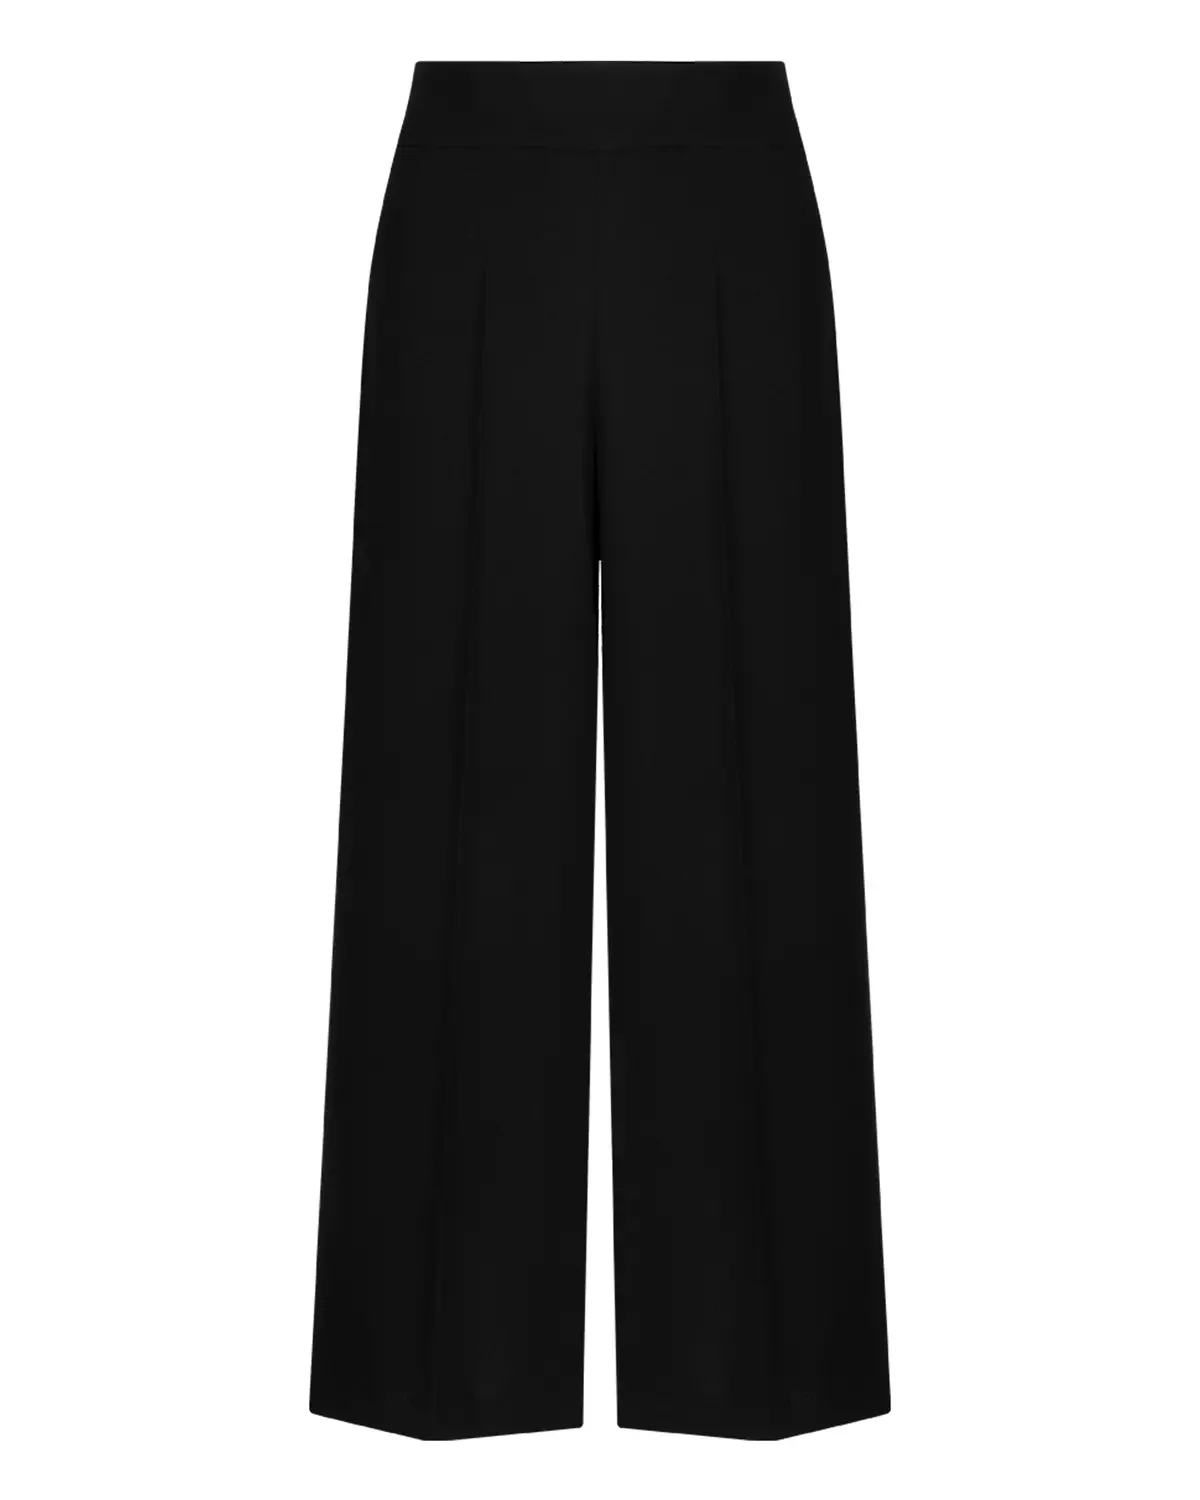 Geniş Paçalı Klasik Kesim Pantolon-Siyah - 4